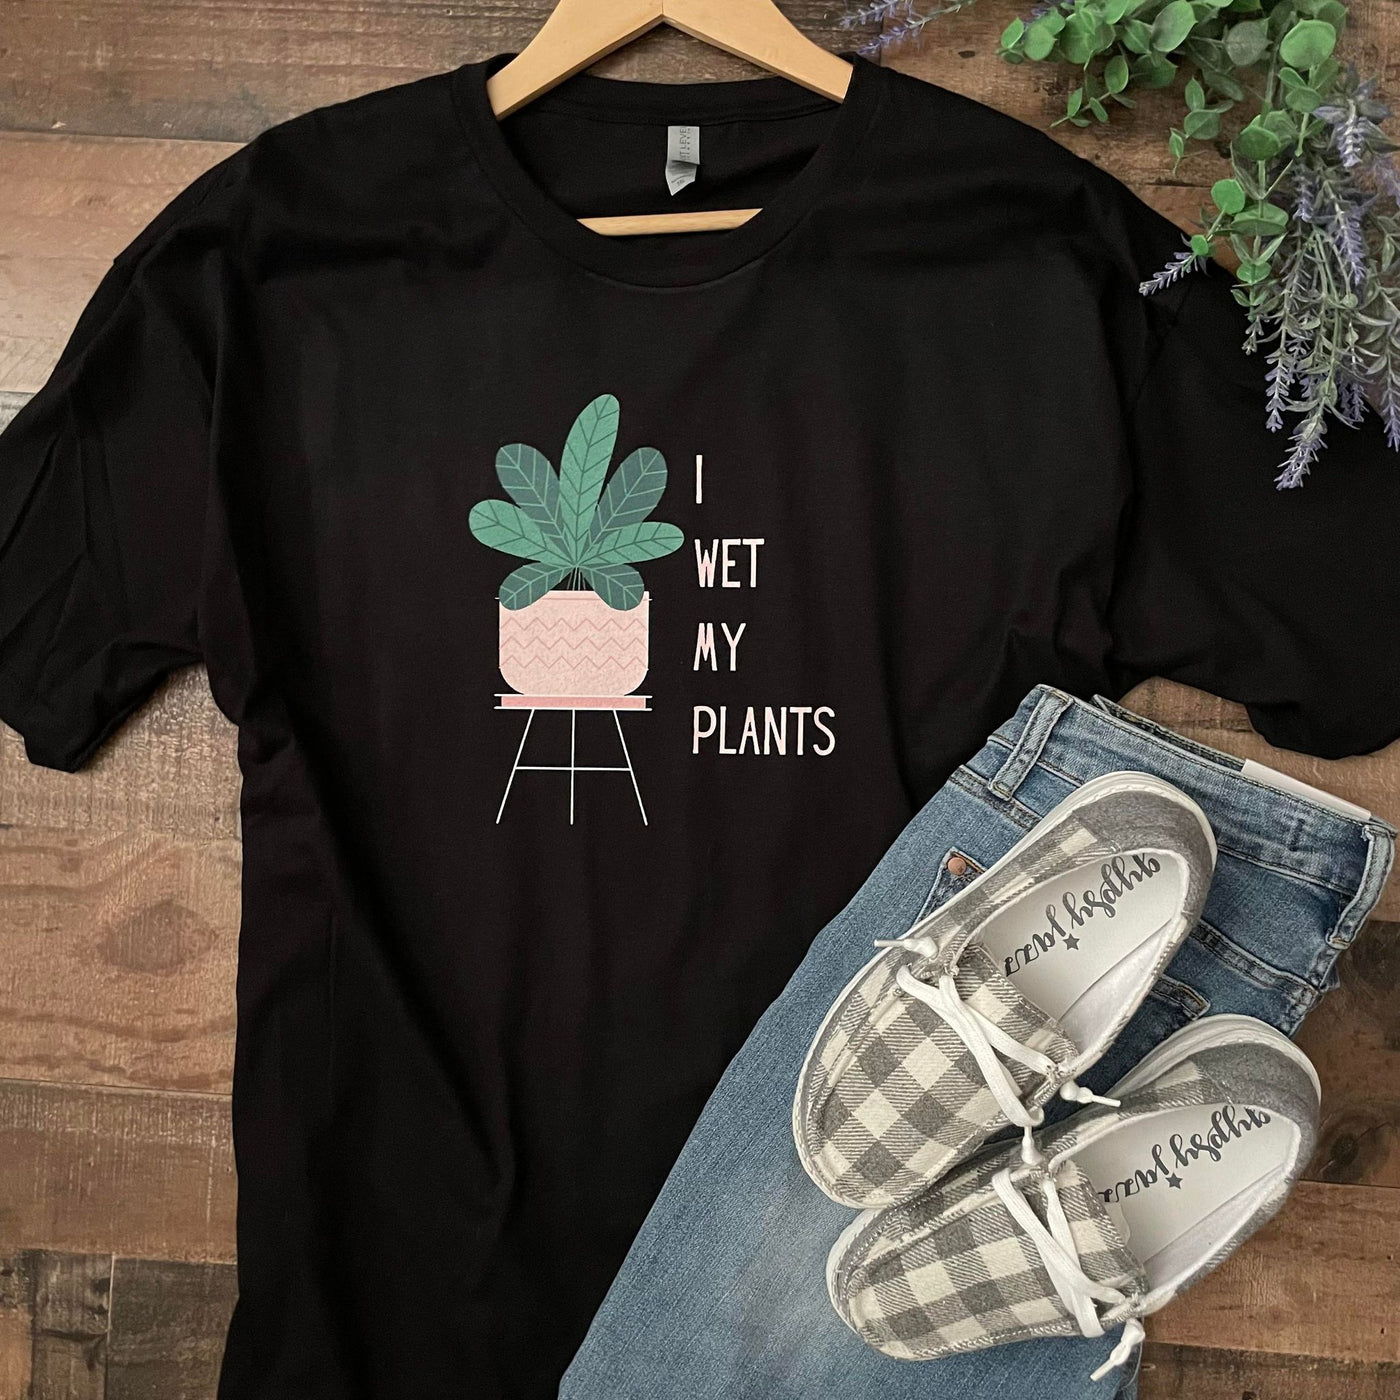 I Wet My Plants Graphic Tee Shirt